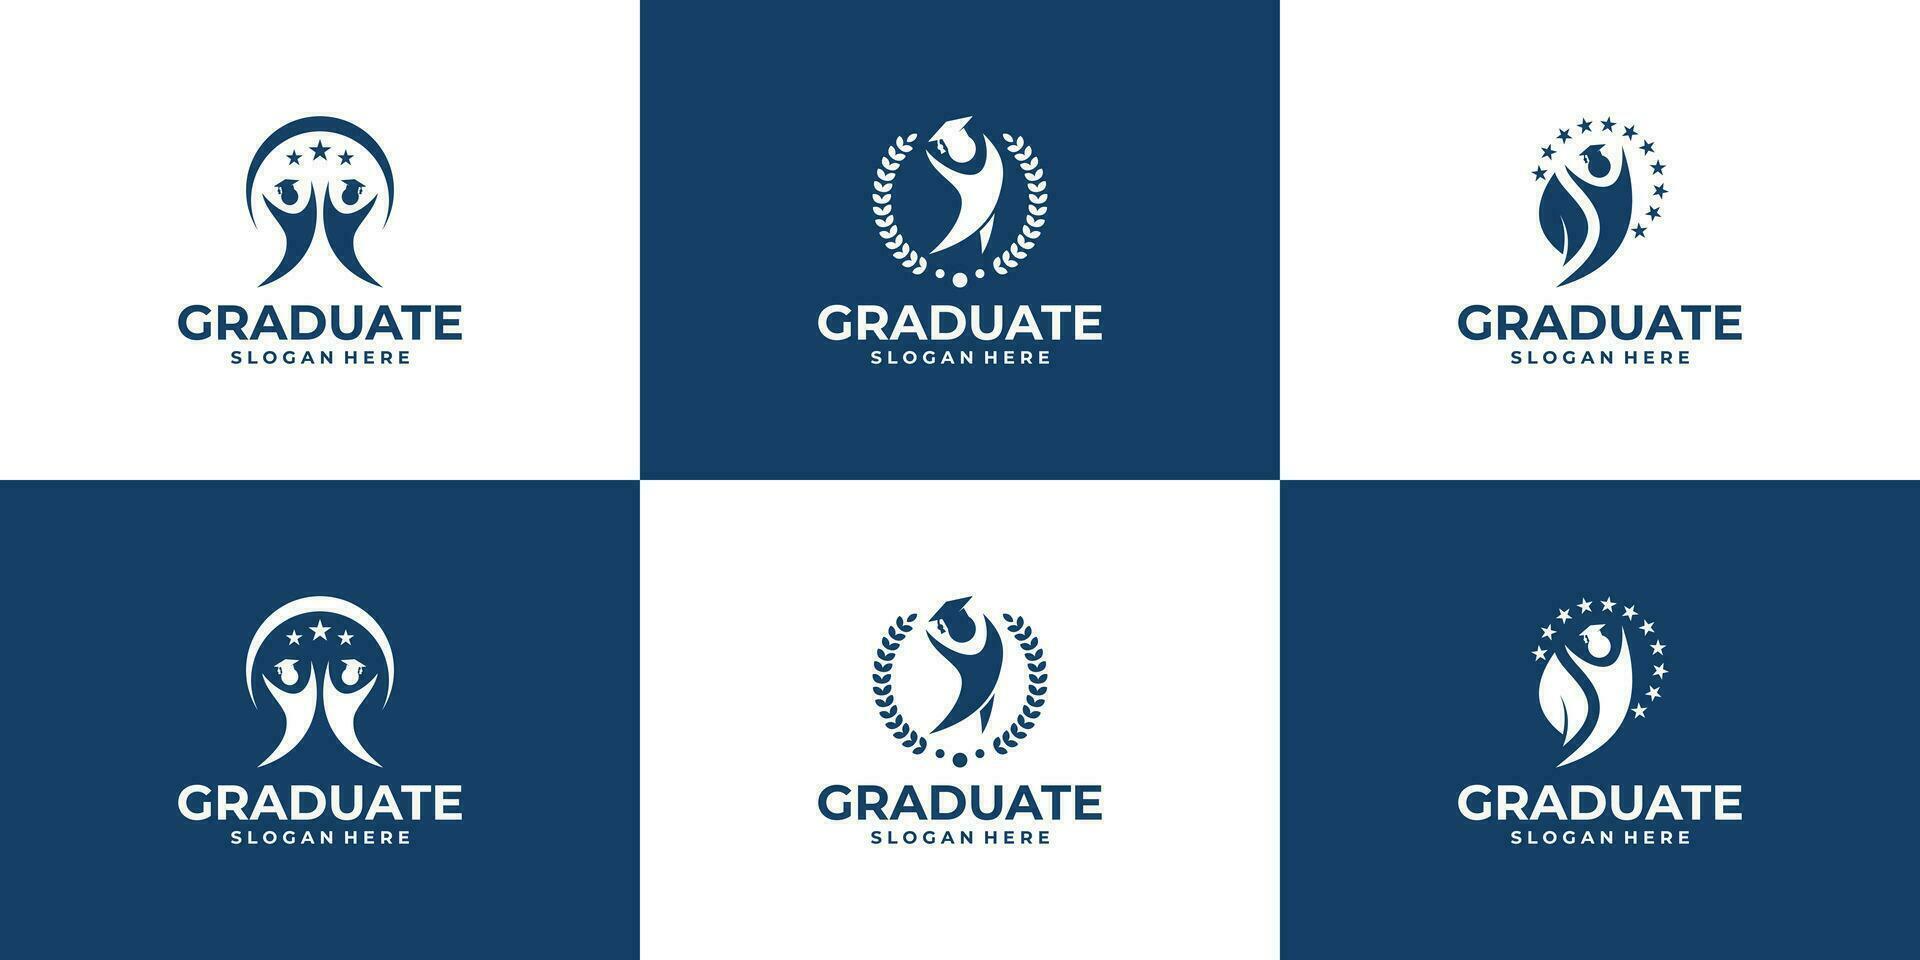 Set of education and graduation emblem logo design. vector